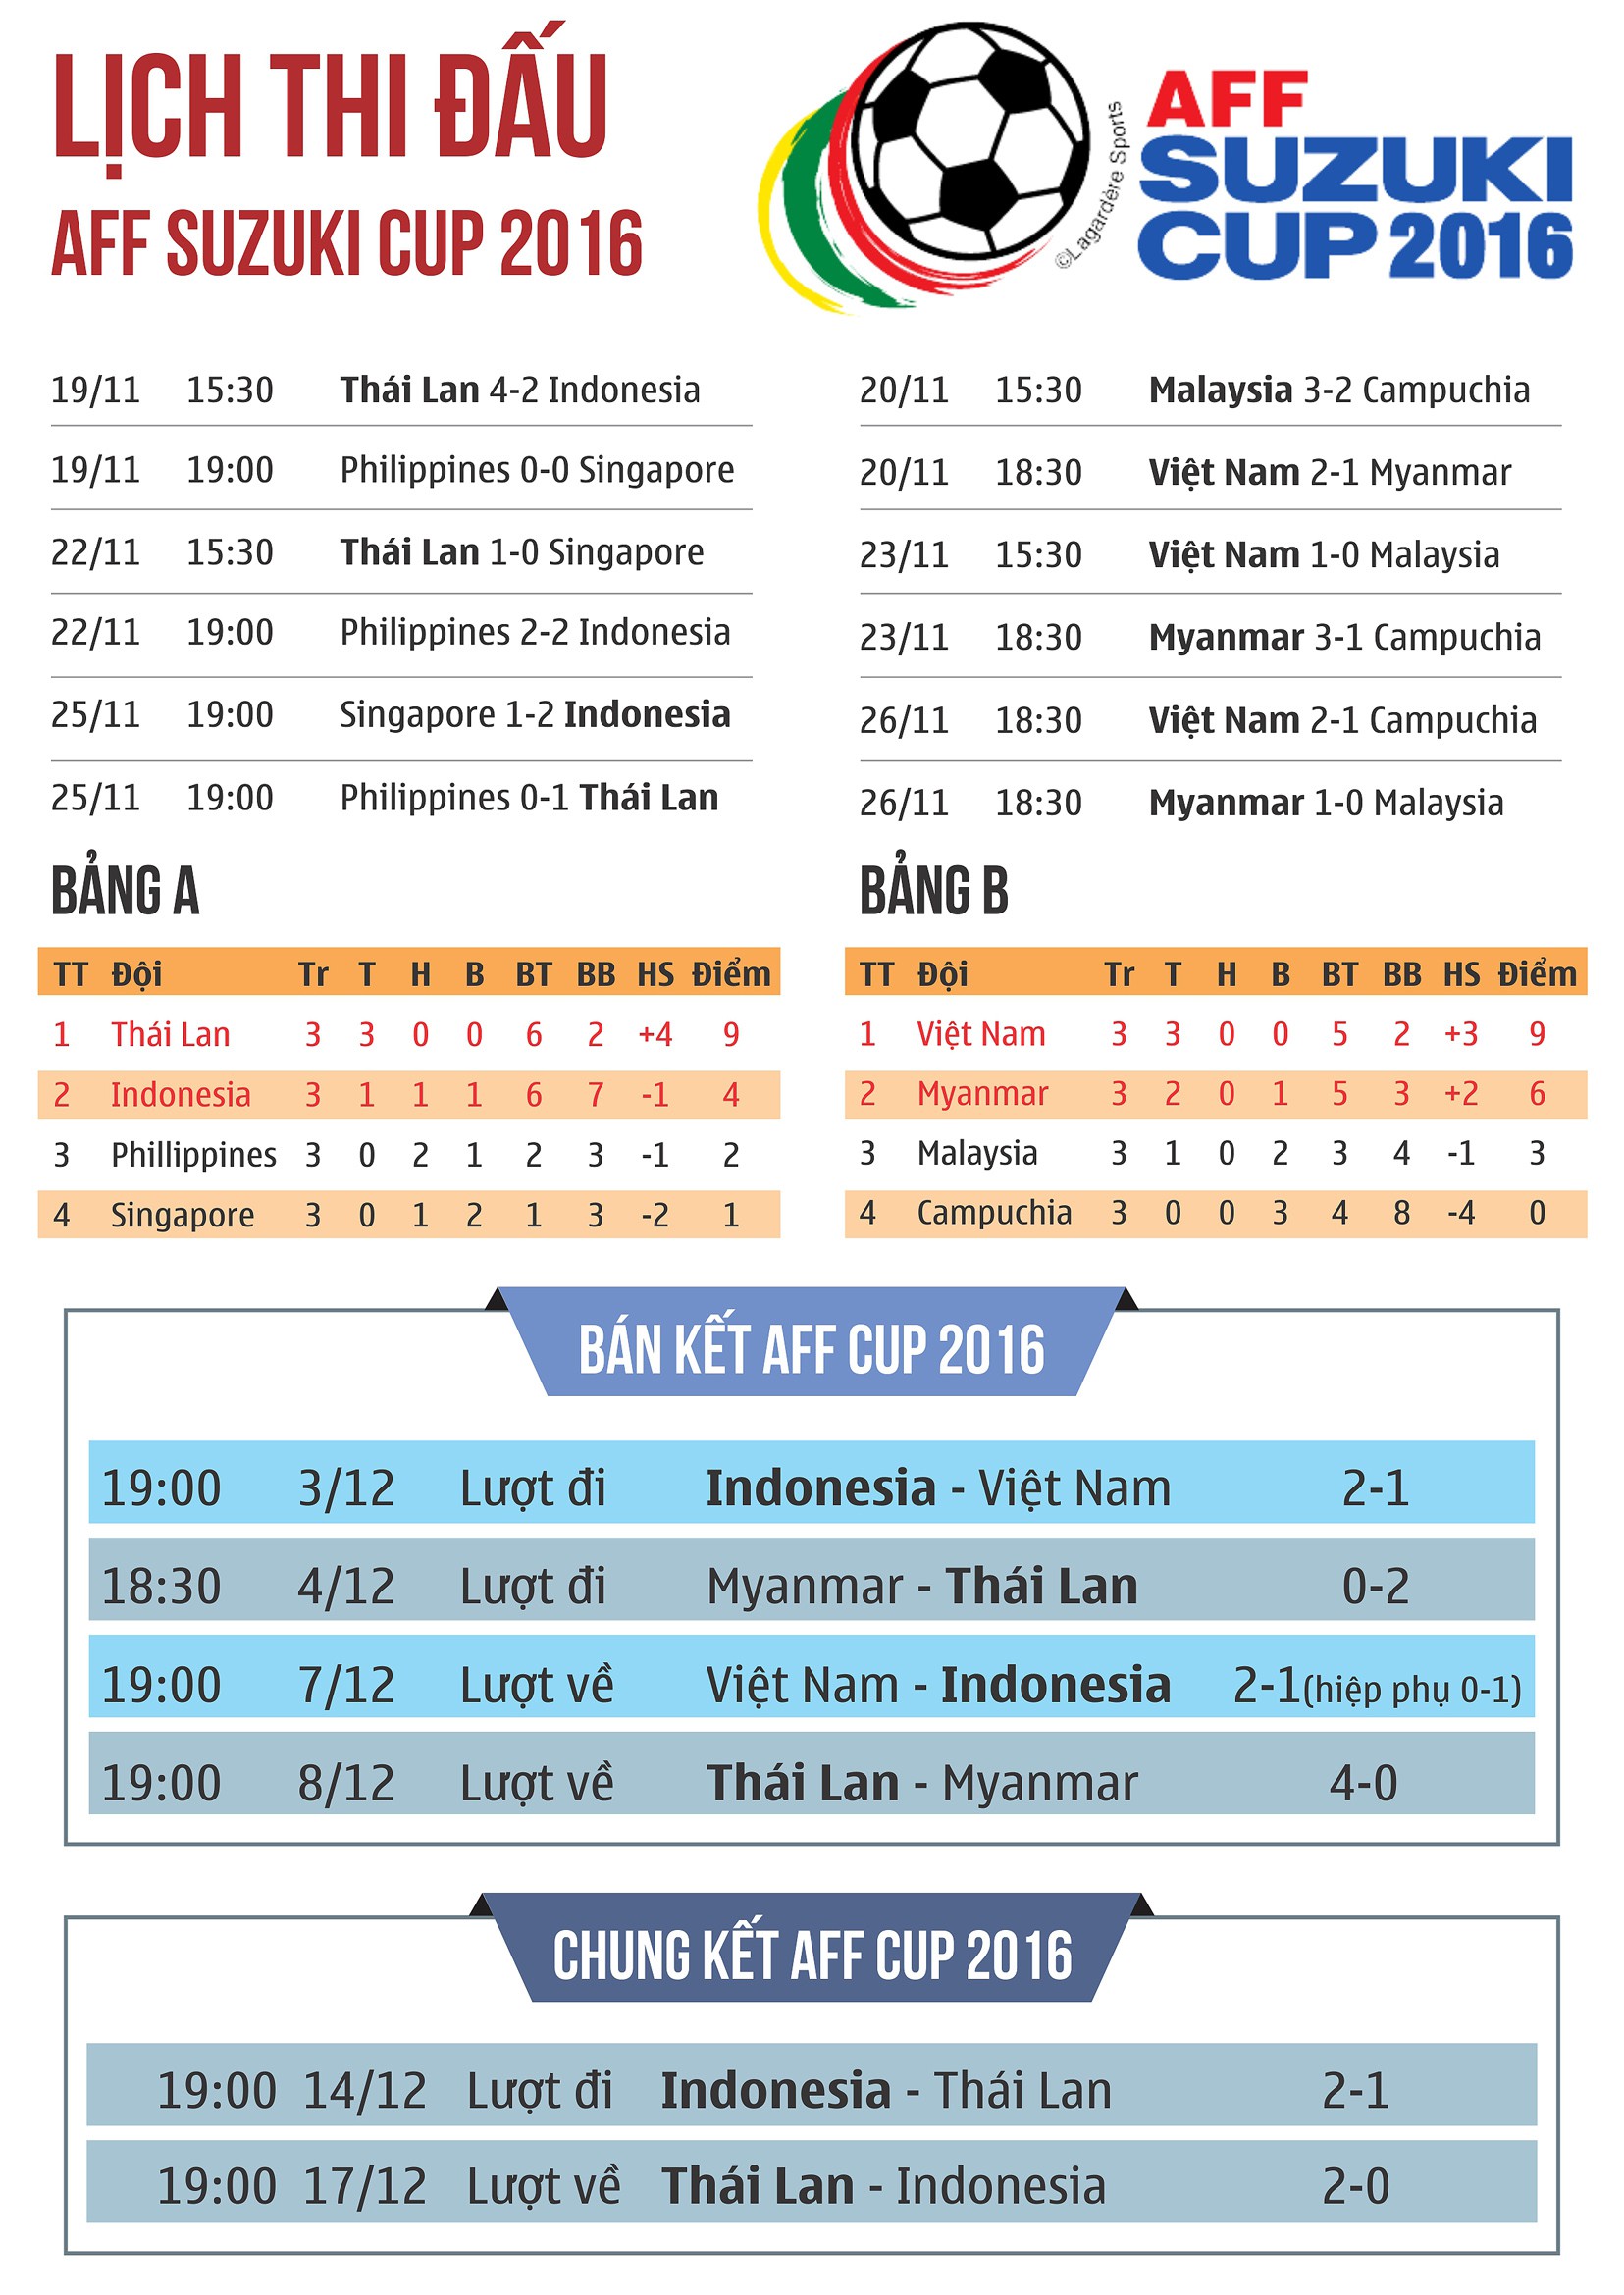 Lịch thi đấu VCK AFF Suzuki Cup 2016